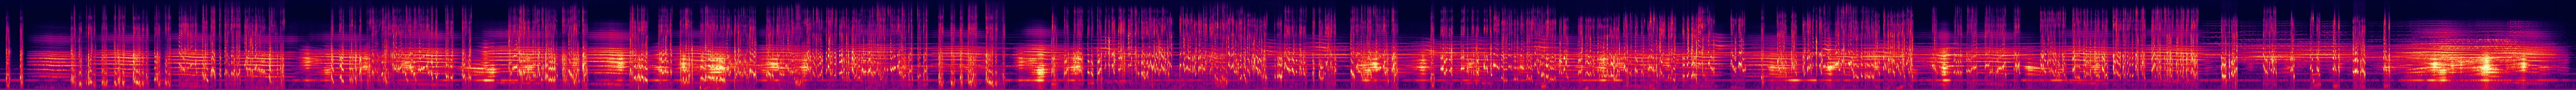 Amor Dei - 3. I'd like to believe in God but... - Spectrogram.jpg